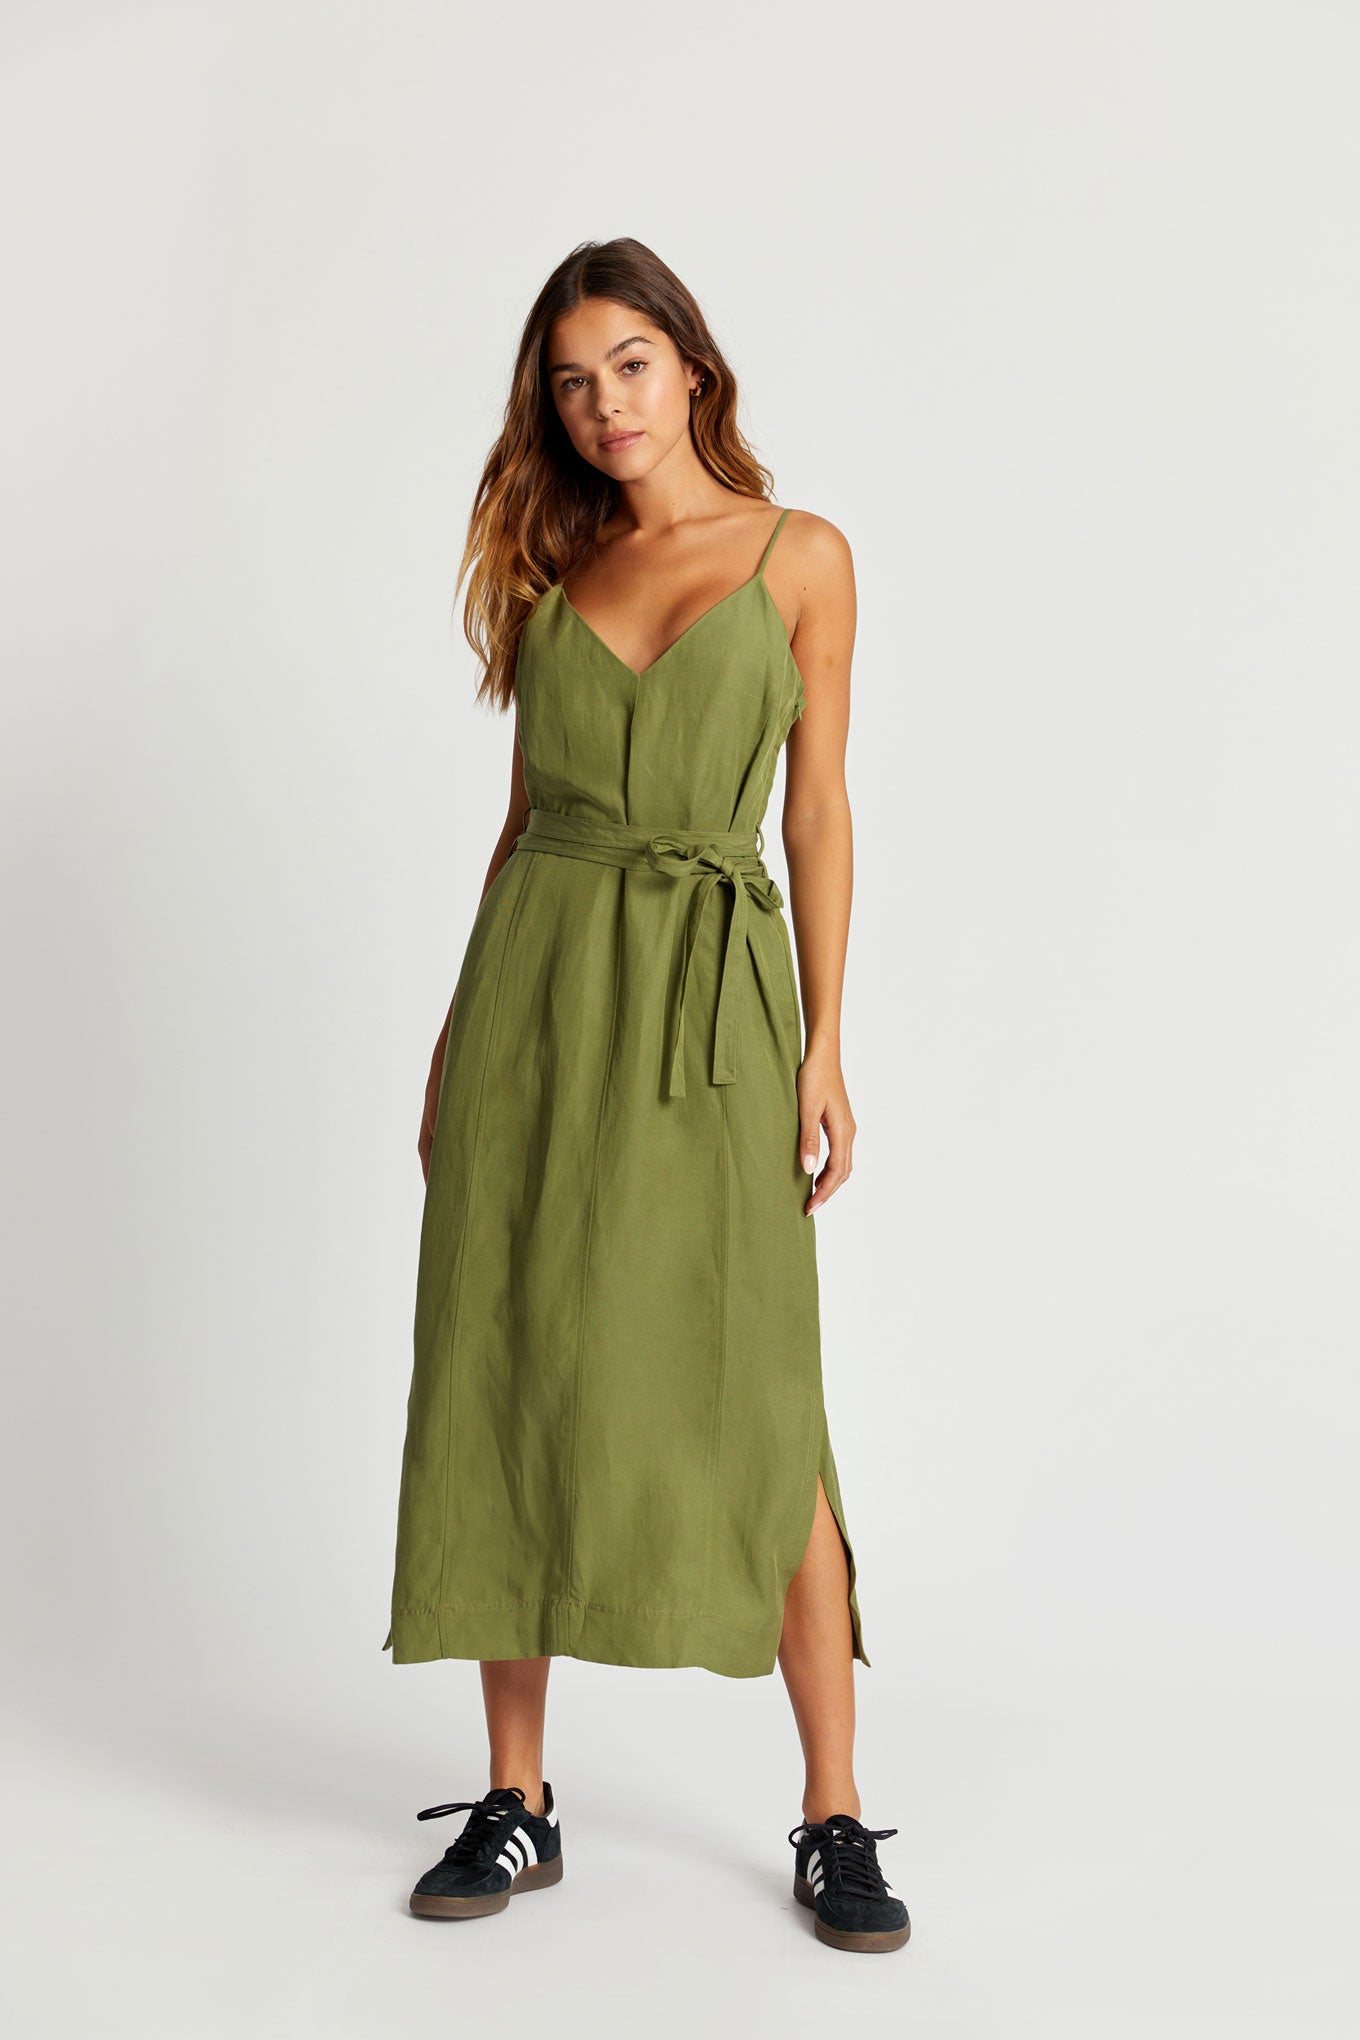 IMAN Tencel Linen Slip Dress - Khaki Green, SIZE 4 / UK 14 / EUR 42